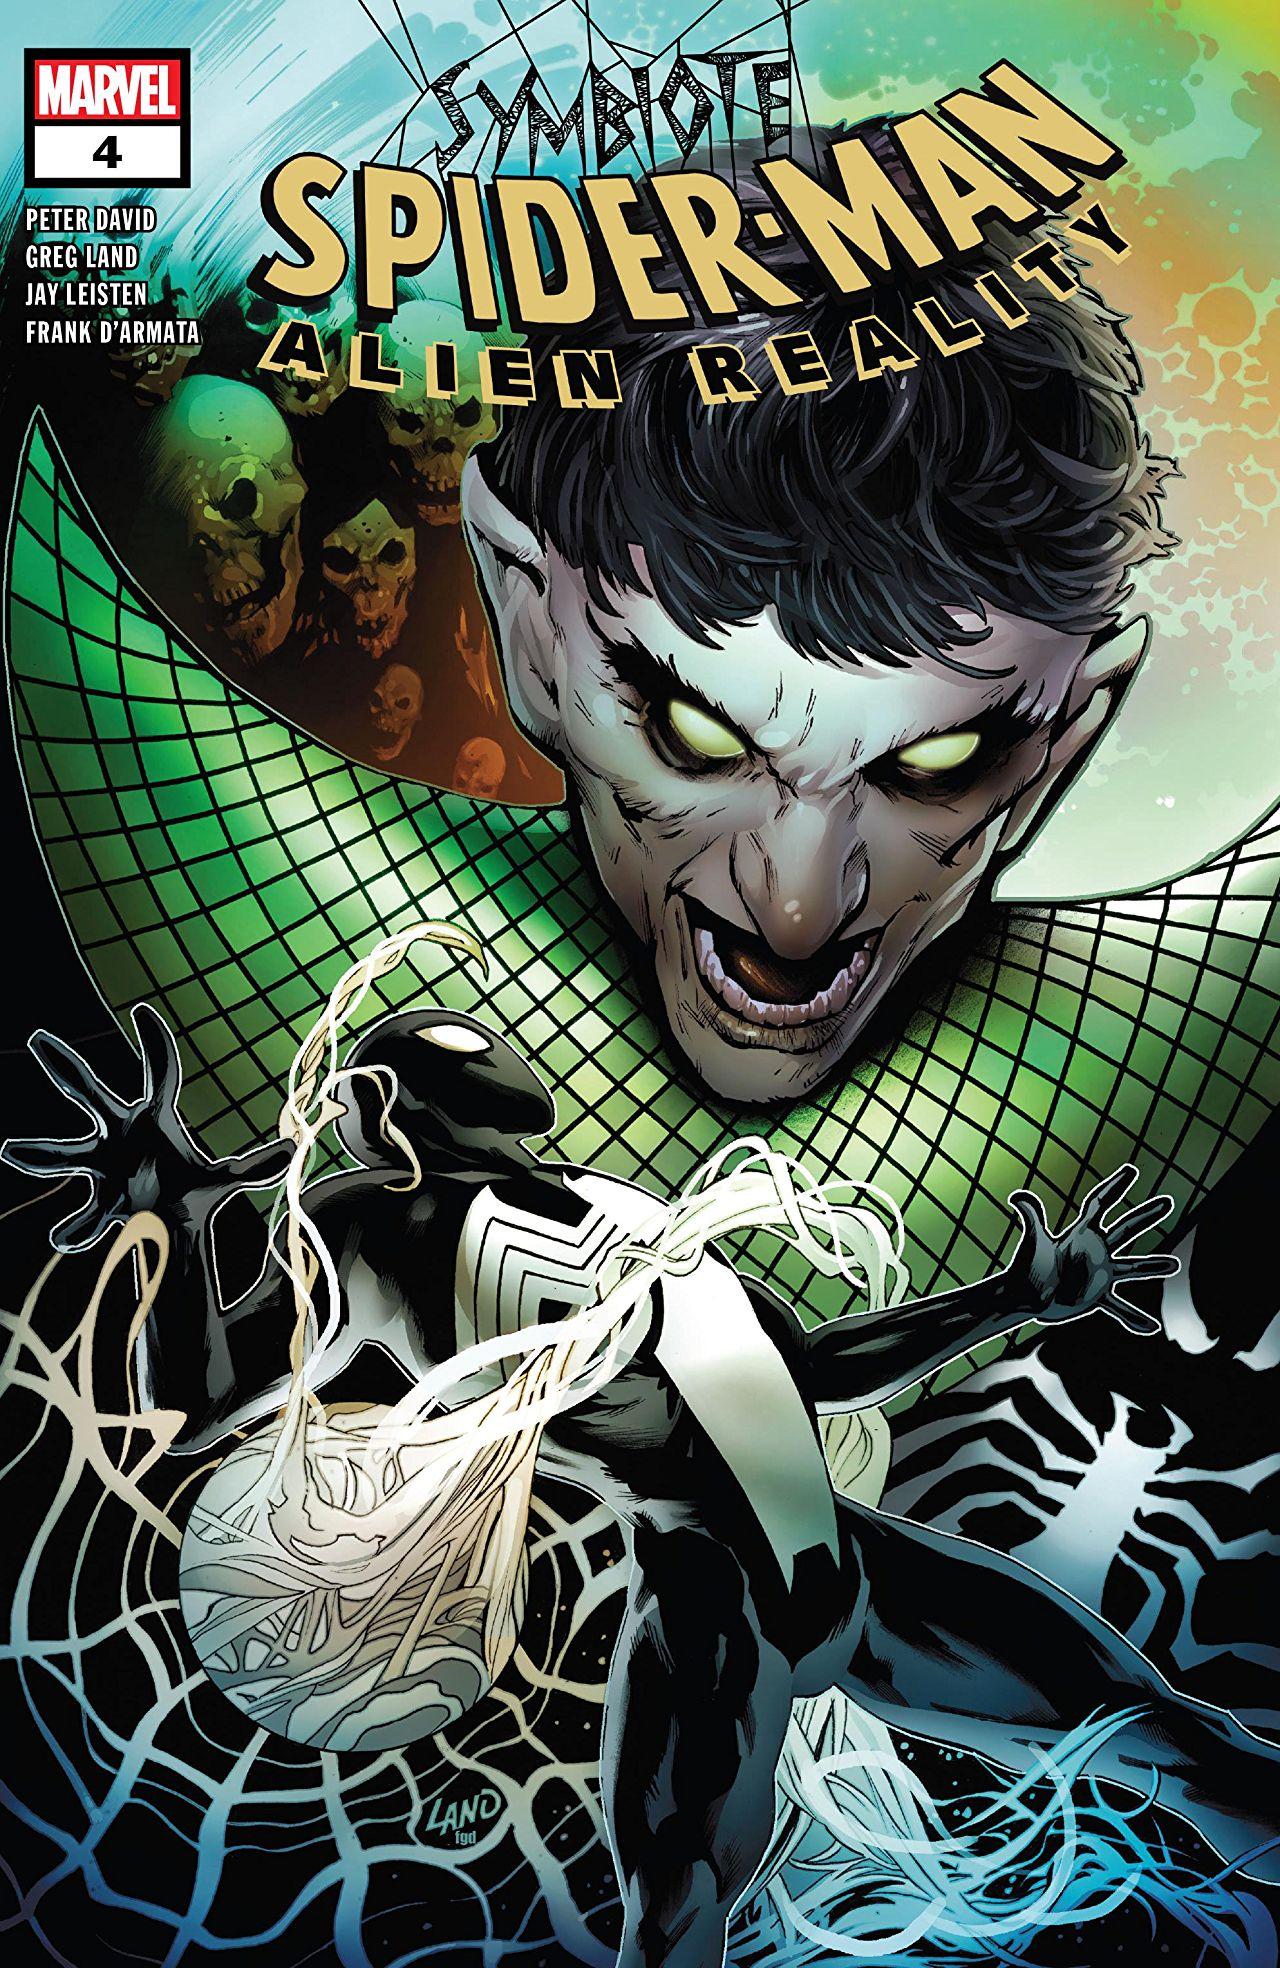 Symbiote Spider-Man: Alien Reality Vol. 1 #4